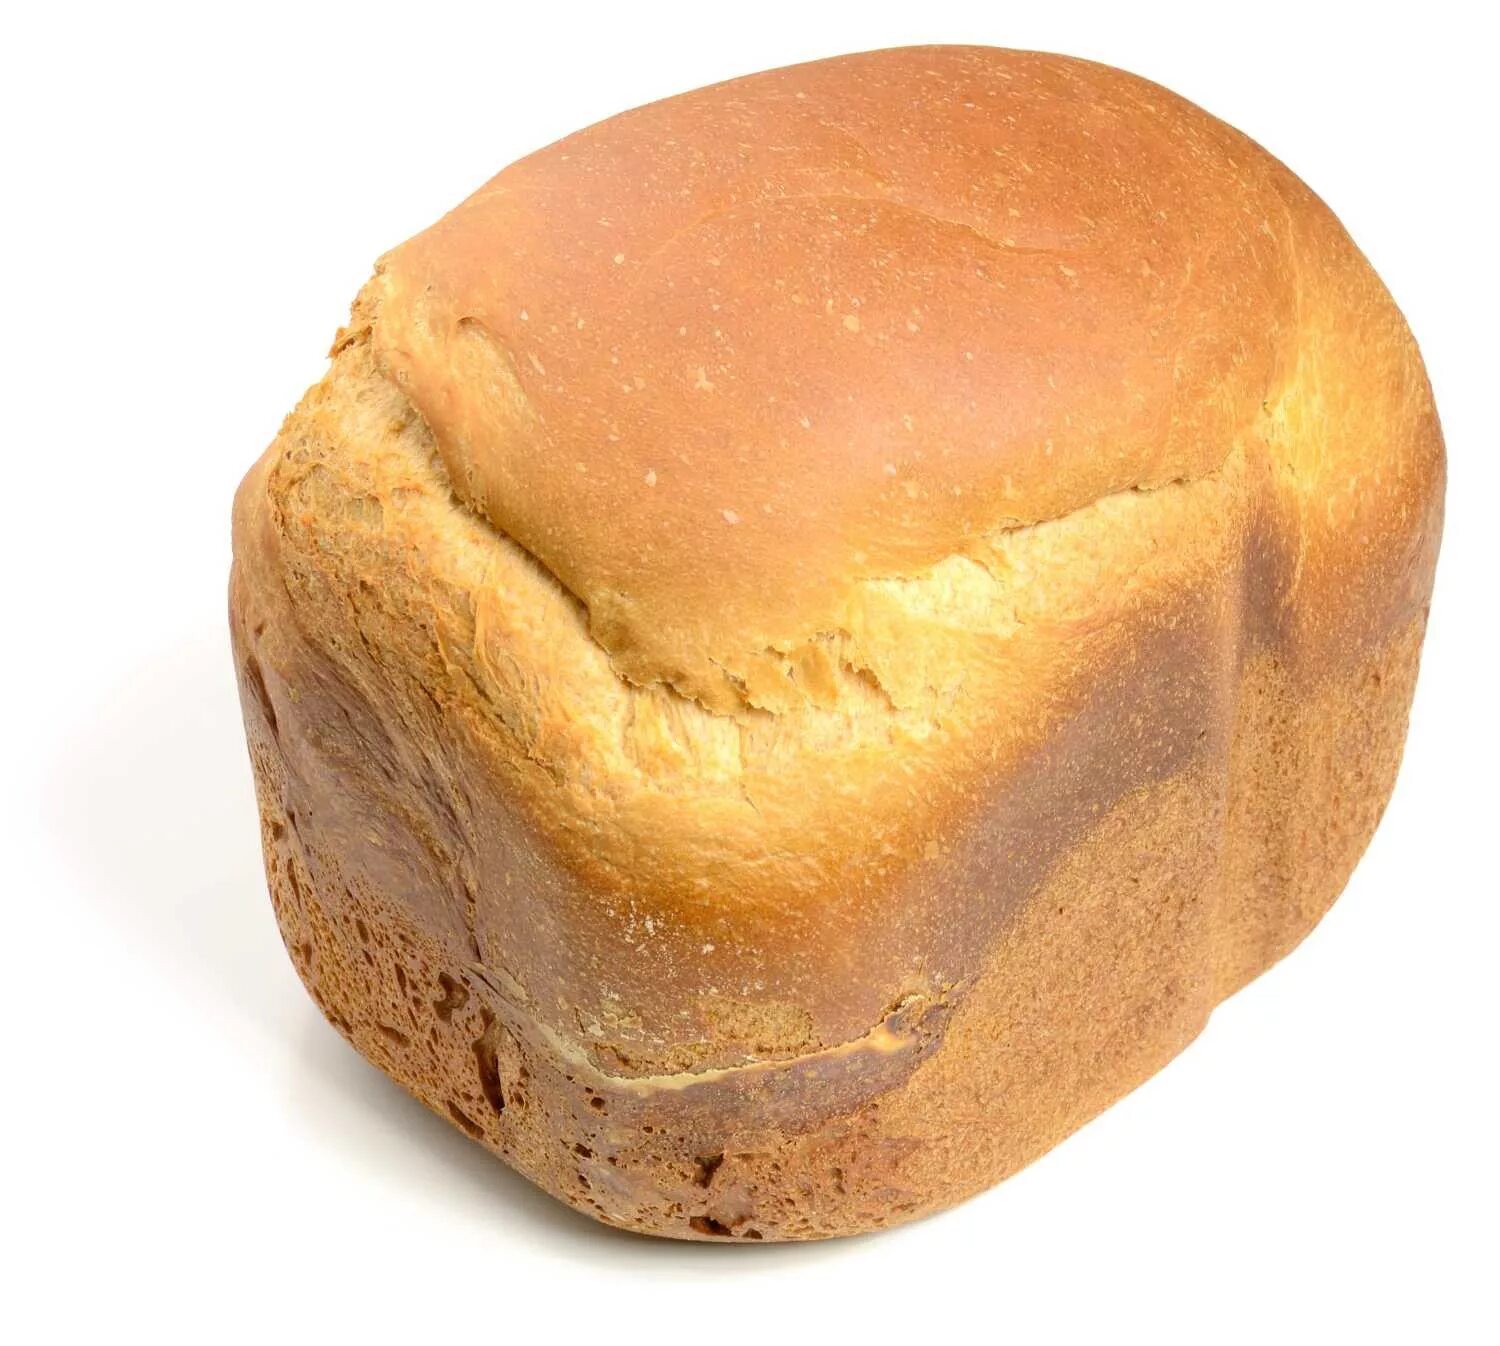 Хлеб в хлебопечке 1 кг. Кишиневский хлеб. Булка белого хлеба. Квадратная булка хлеба. Хлеб булочки.